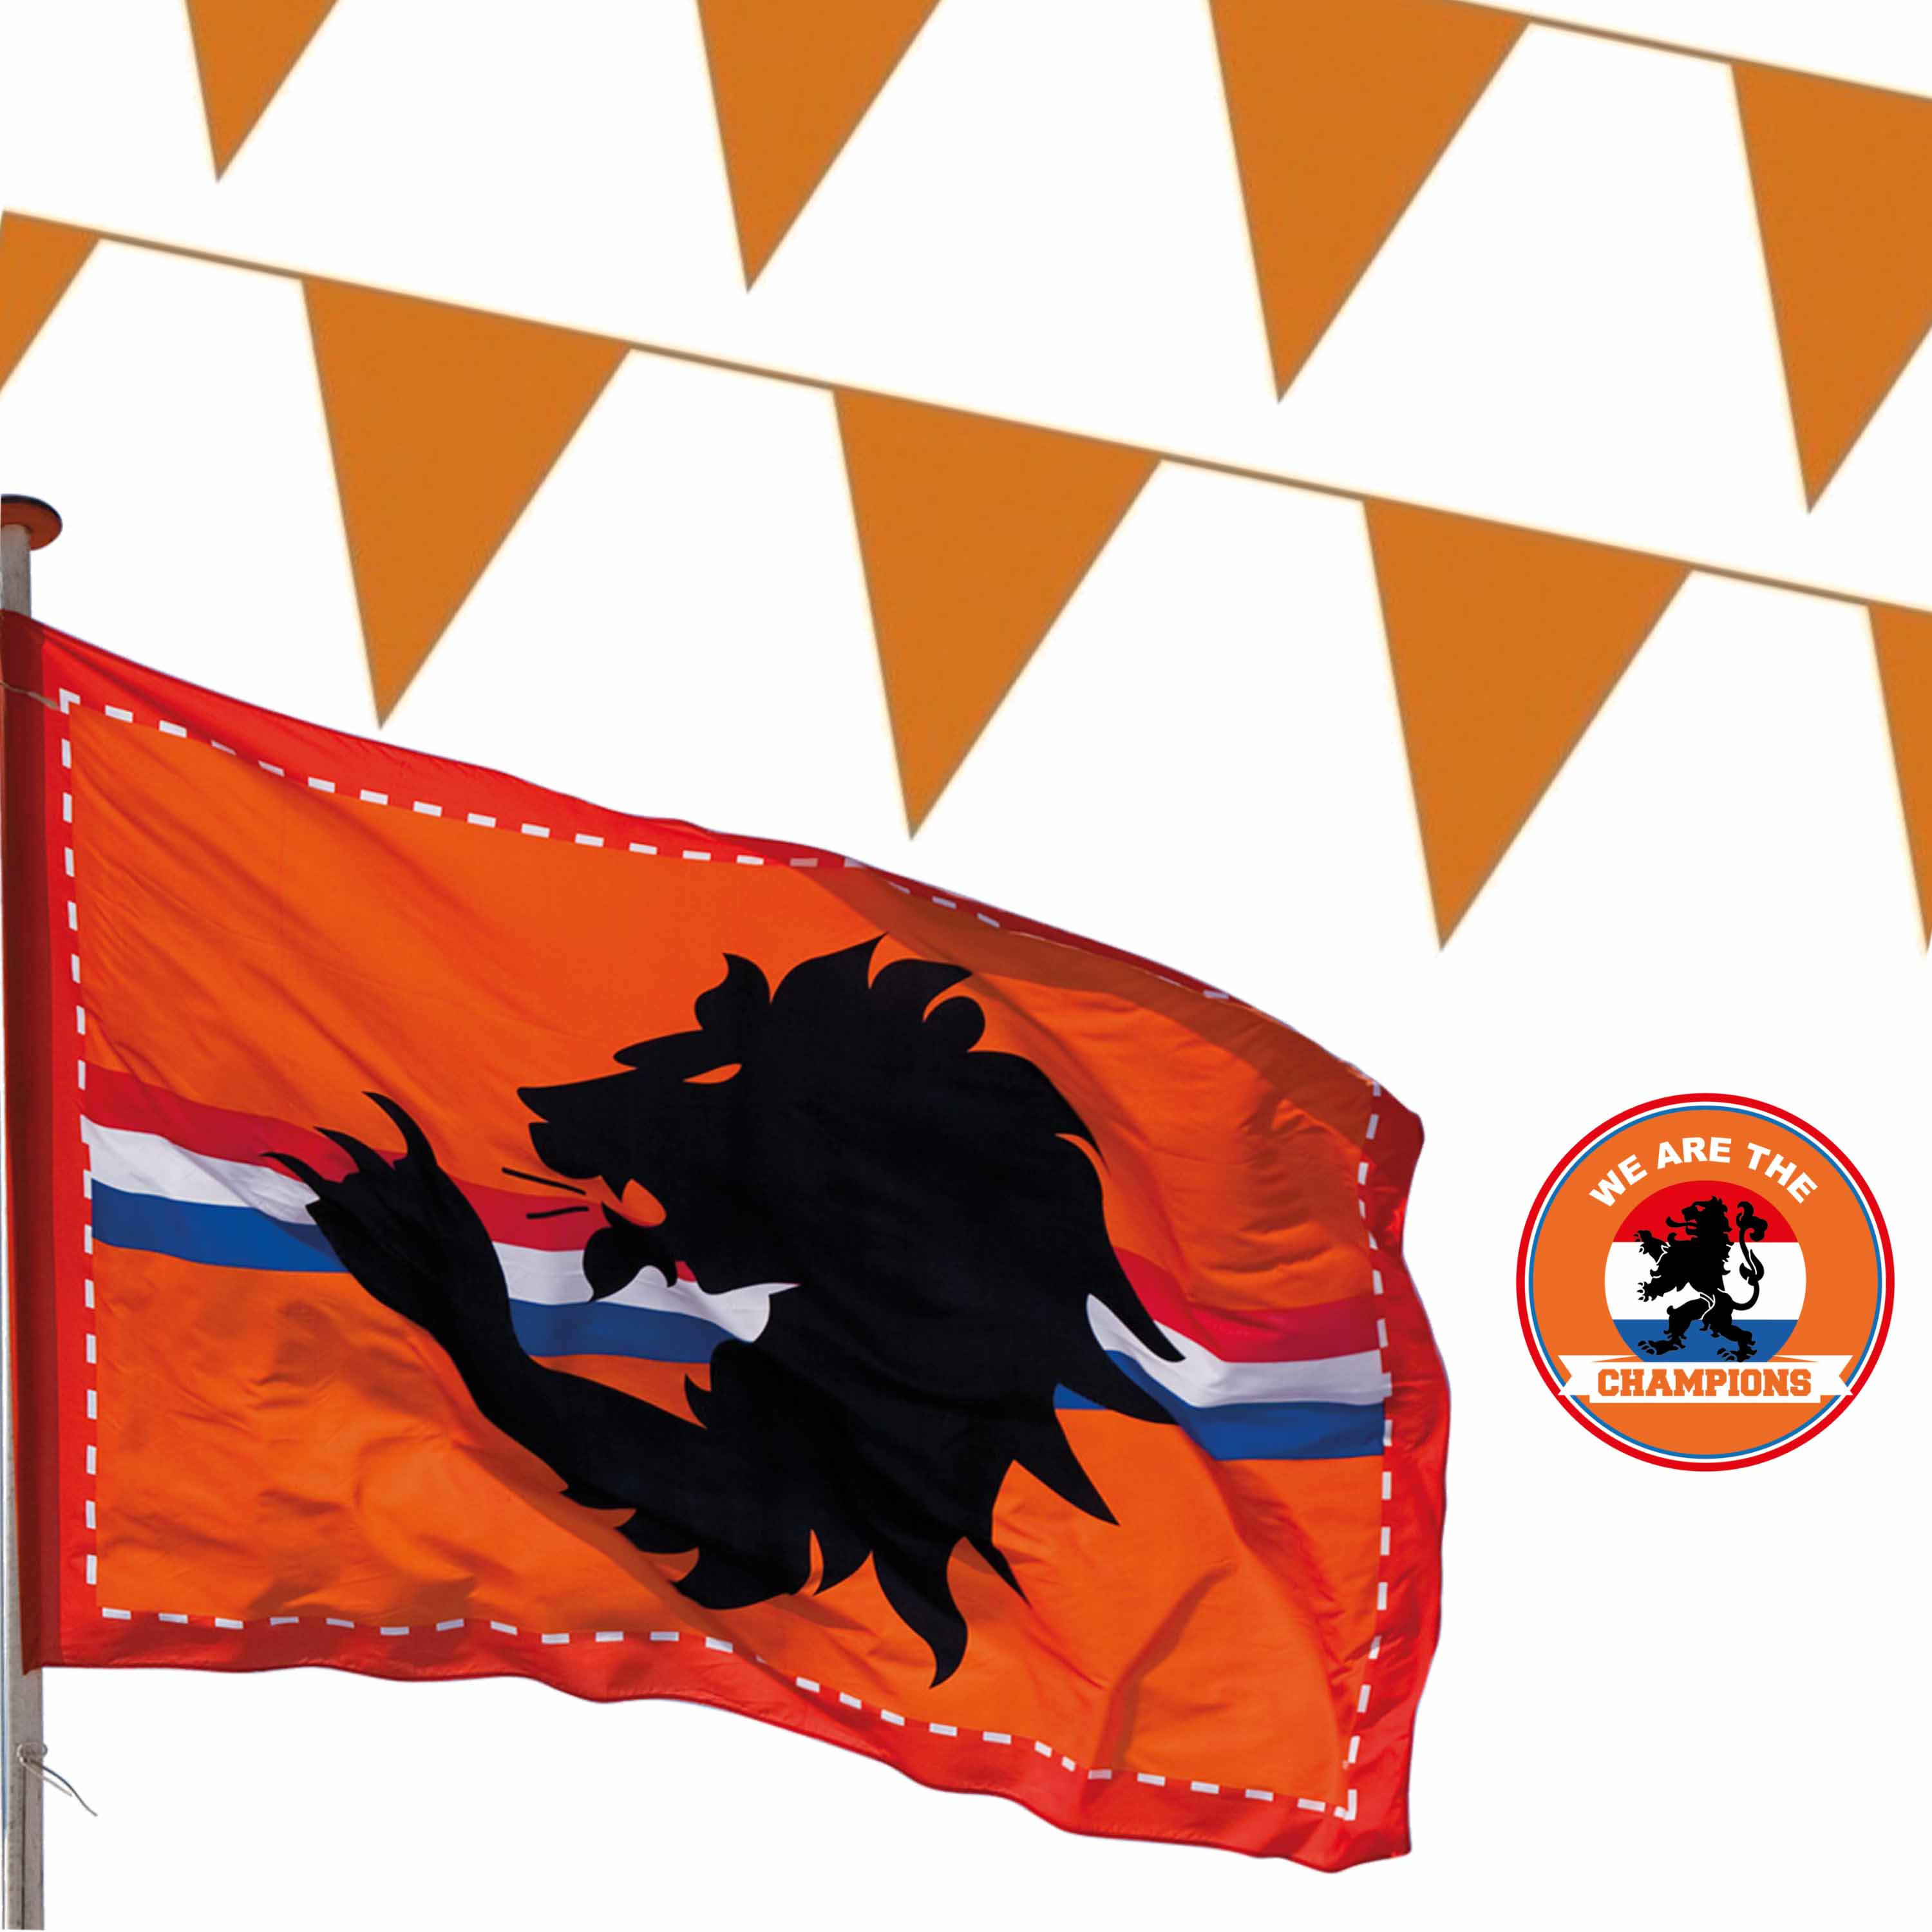 EK oranje straat huis versiering pakket met oa 1x Mega Holland vlag, 100 meter oranje vlaggenlijnen